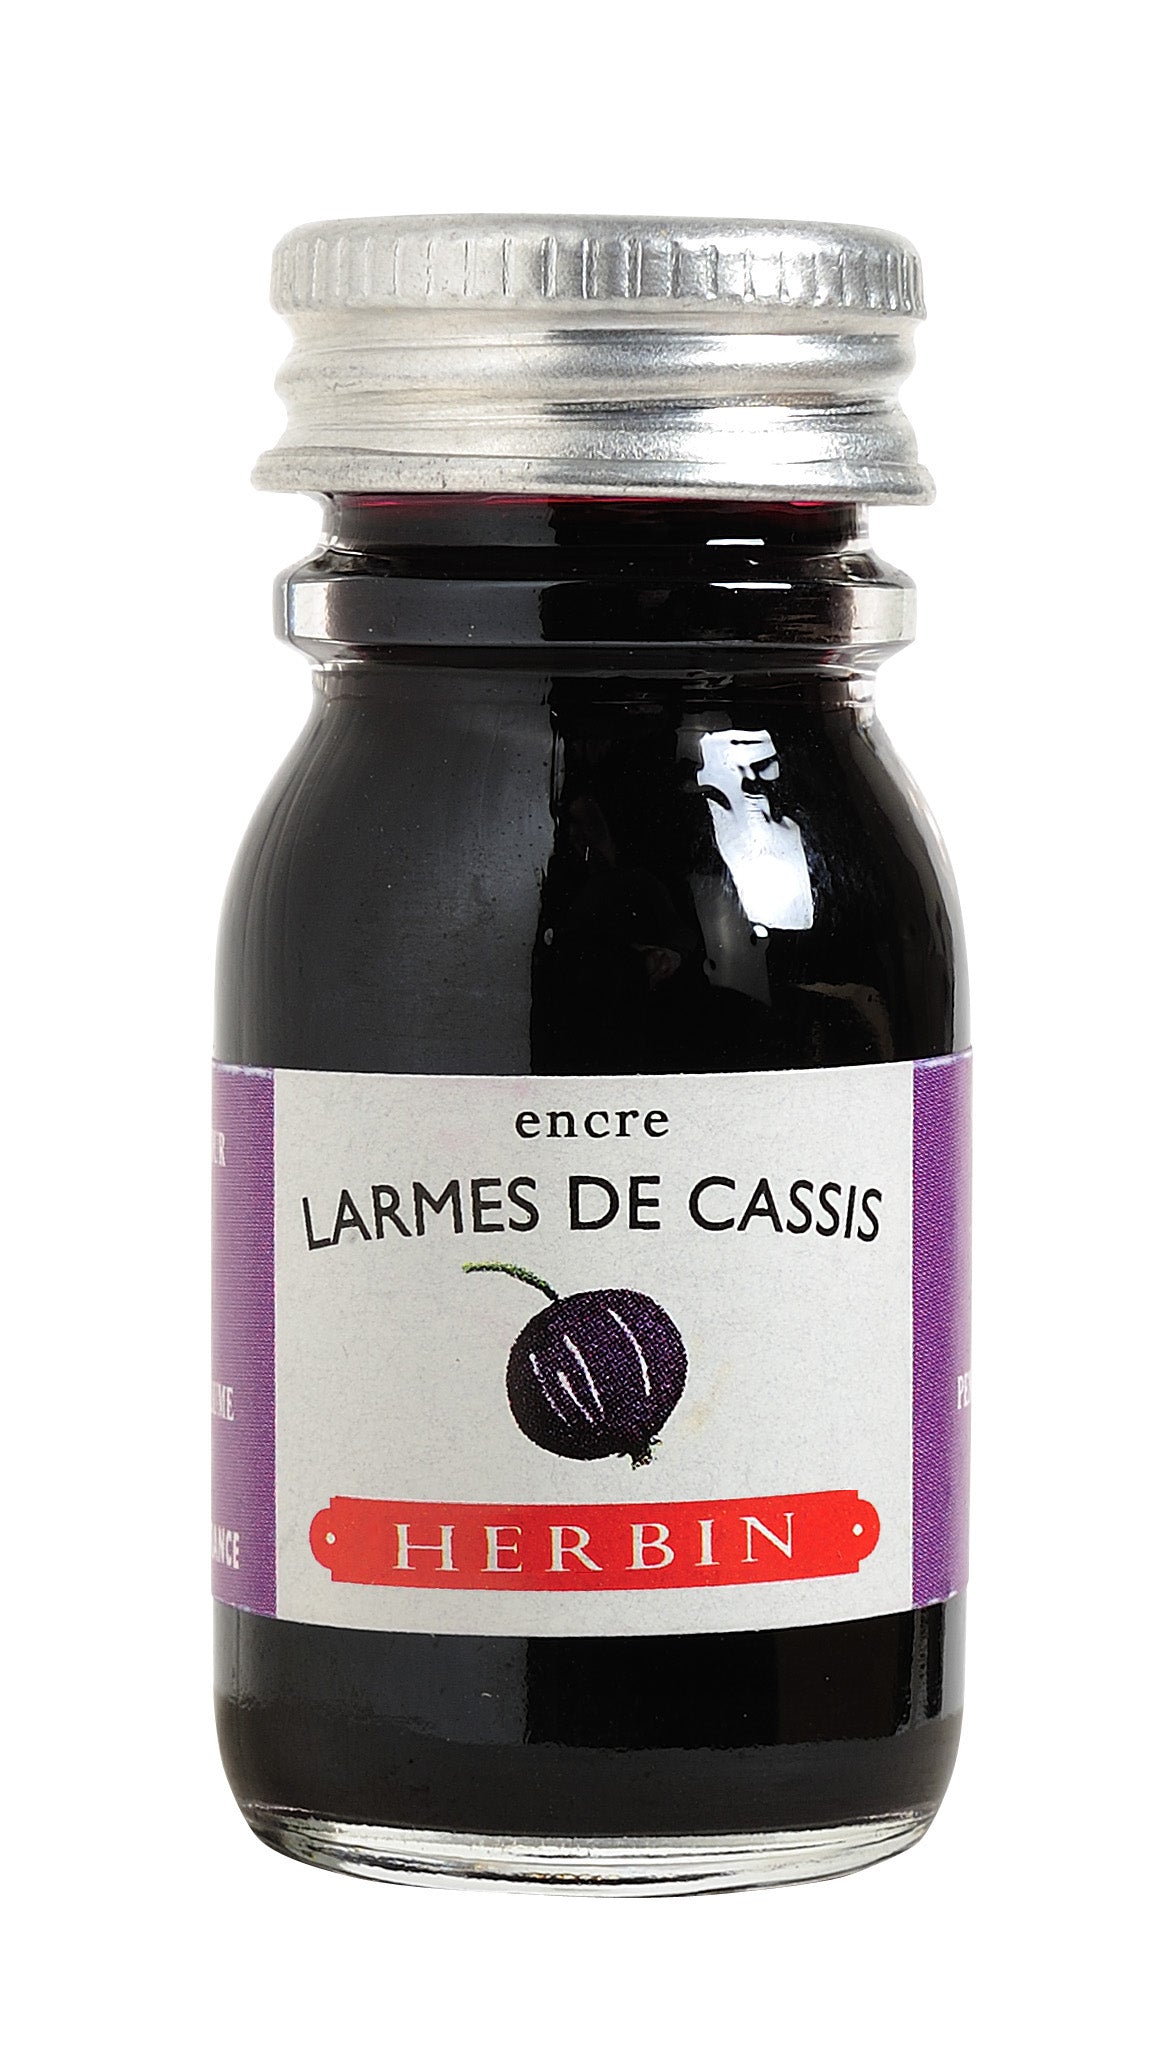 Herbin - Larmes de cassis, 10 ml